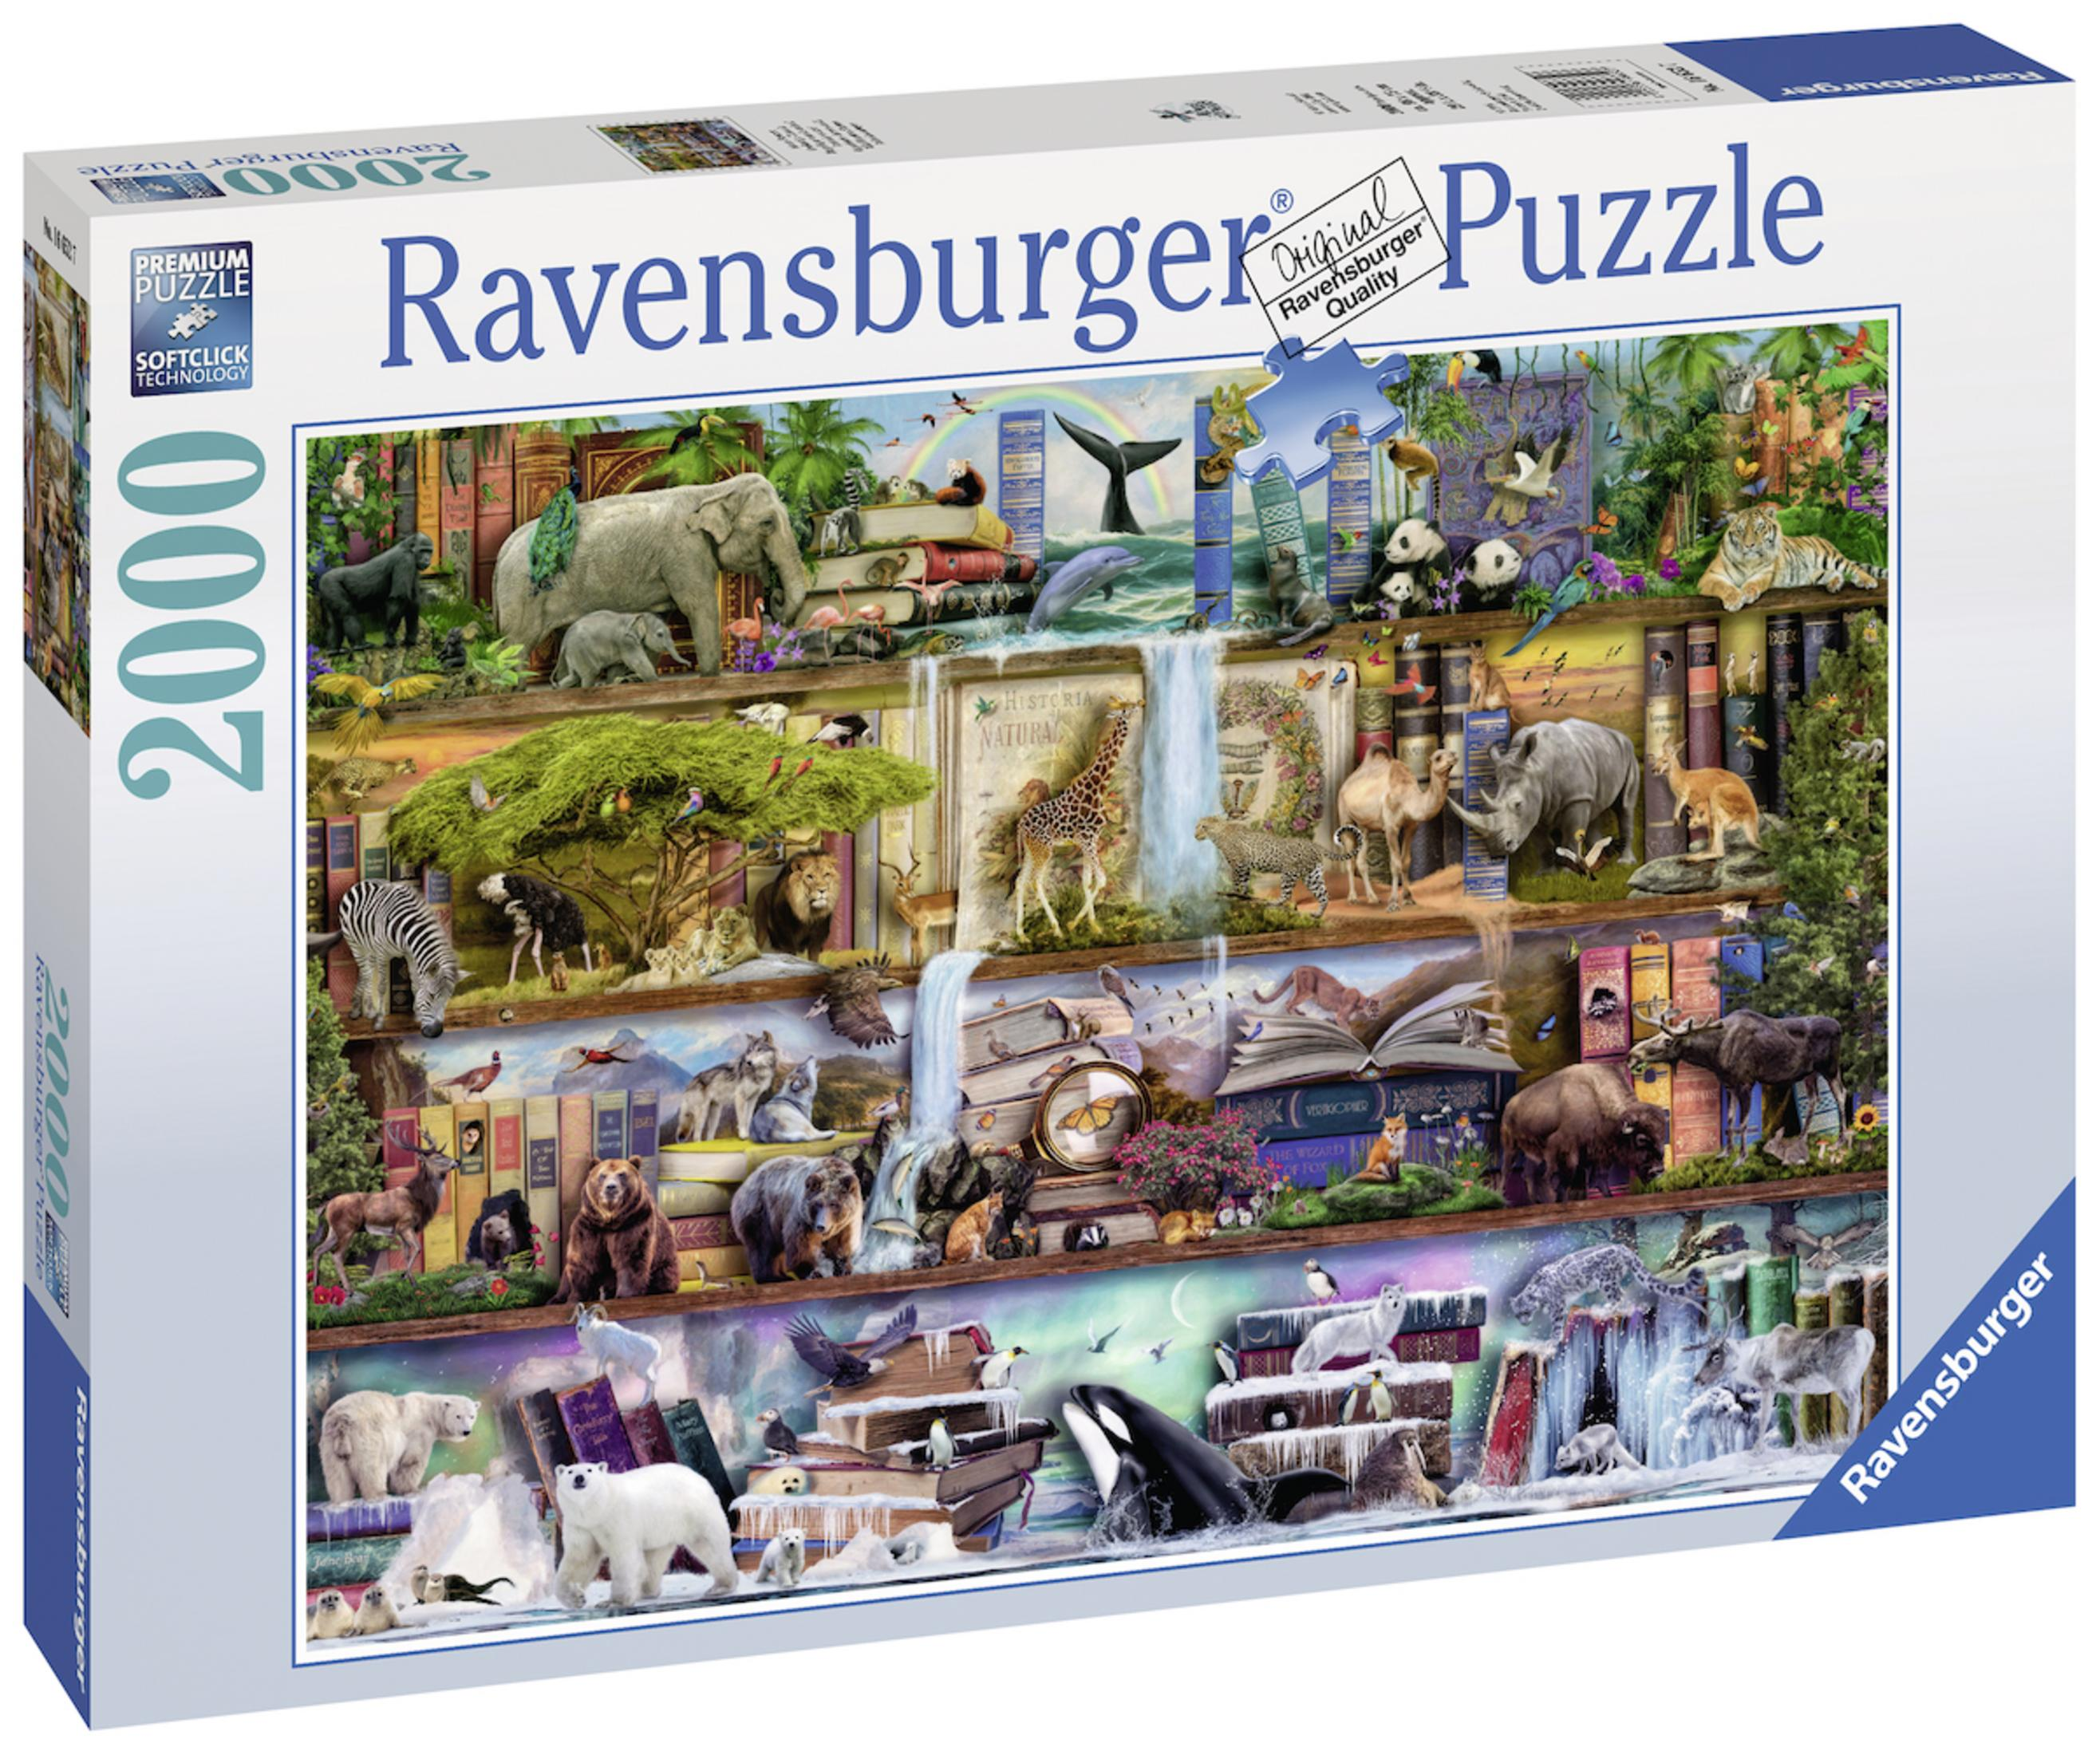 RAVENSBURGER Puzzle 16652 STEWART-GROSSARTIGE AIMEE TI